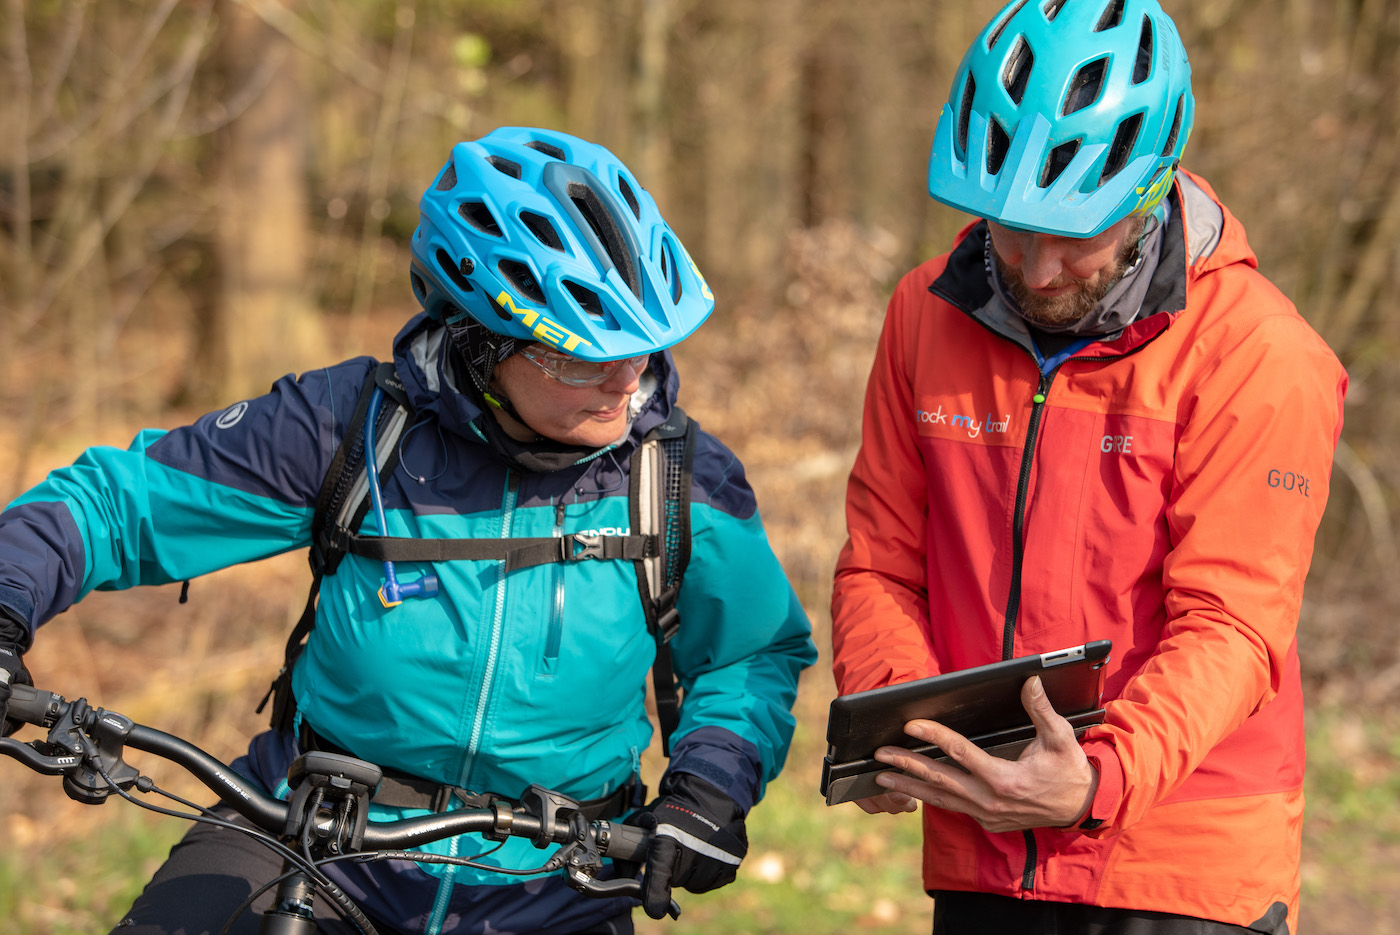 eMTB Fortgeschritten Fahrtechnik Kurs in Winterberg - Trailpark Sauerland eBike- Rock my Trail Bikeschule